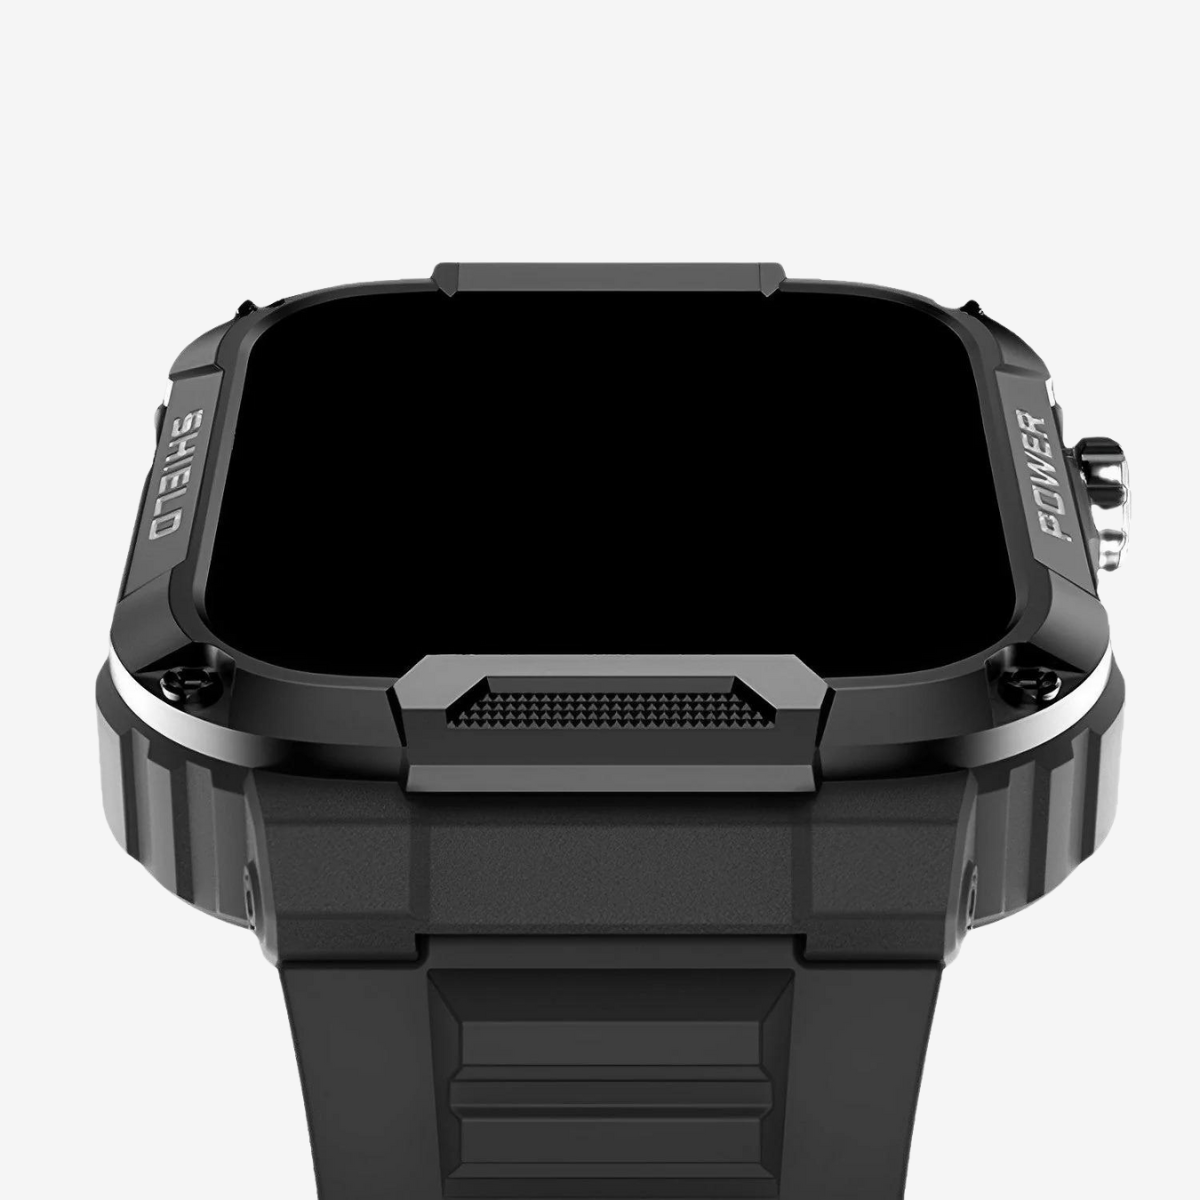 Gard Pro Ultra Smartwatch